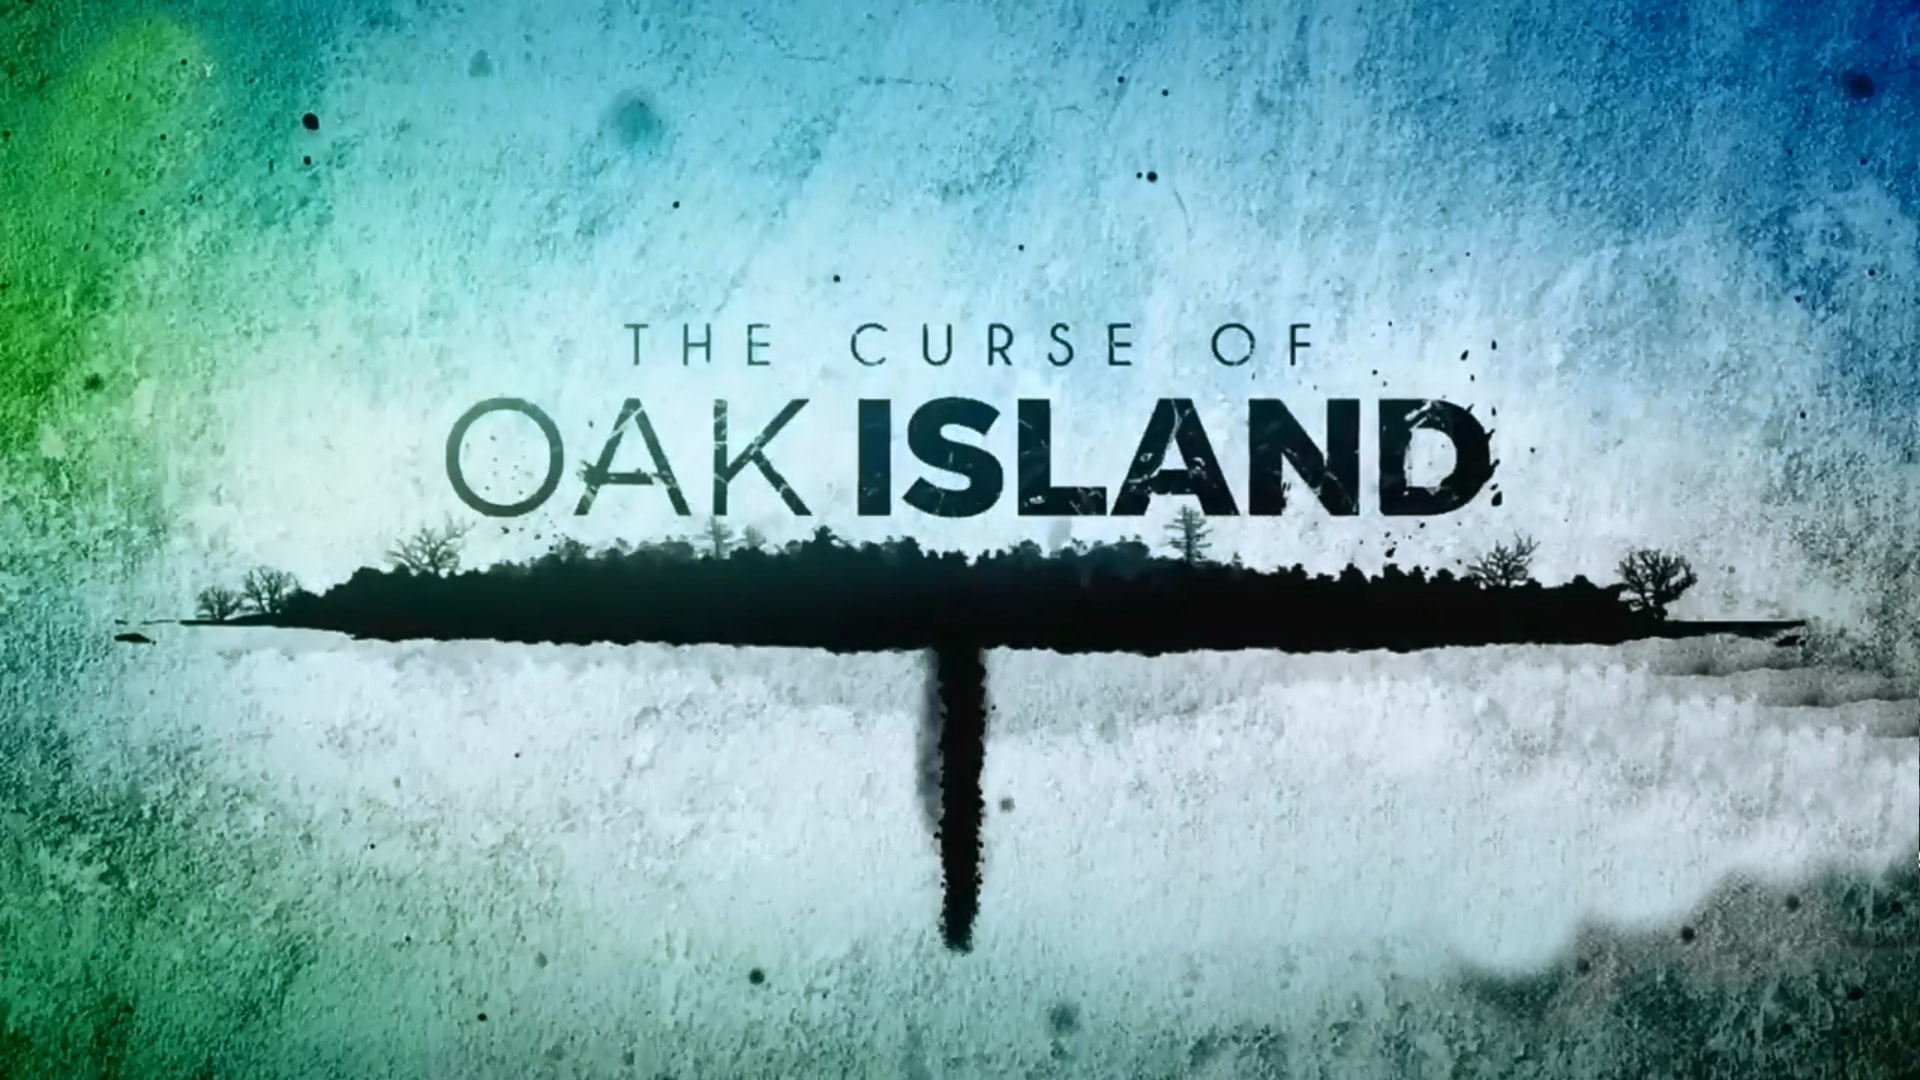 The Curse Of Oak Island season 11